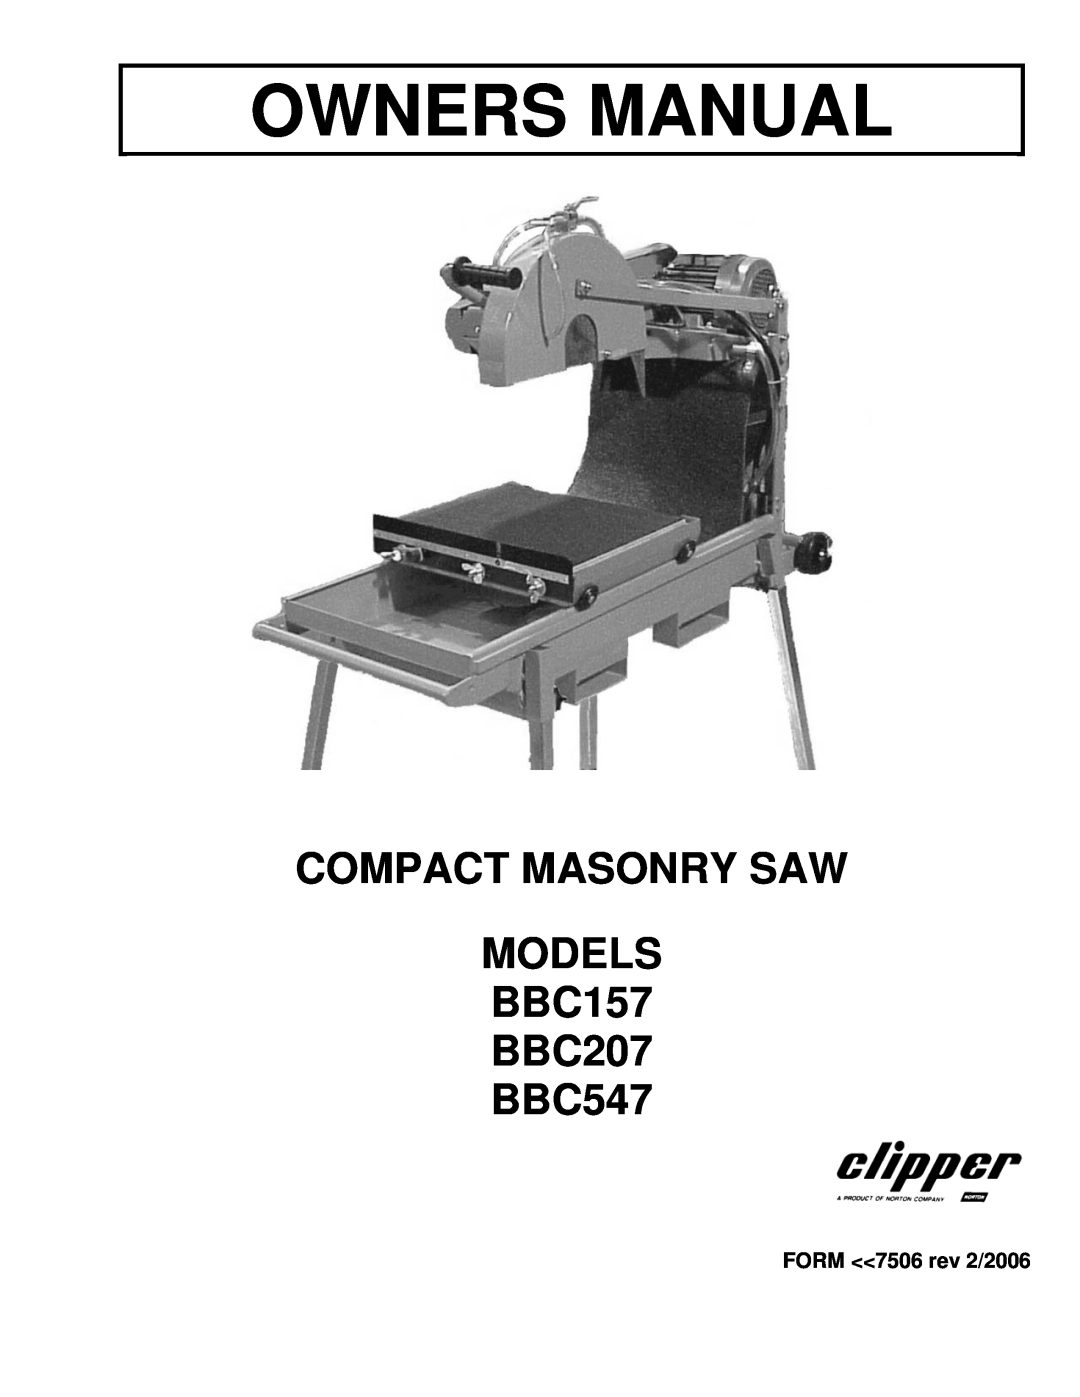 Norton Abrasives owner manual Owners Manual, COMPACT MASONRY SAW MODELS BBC157 BBC207 BBC547 